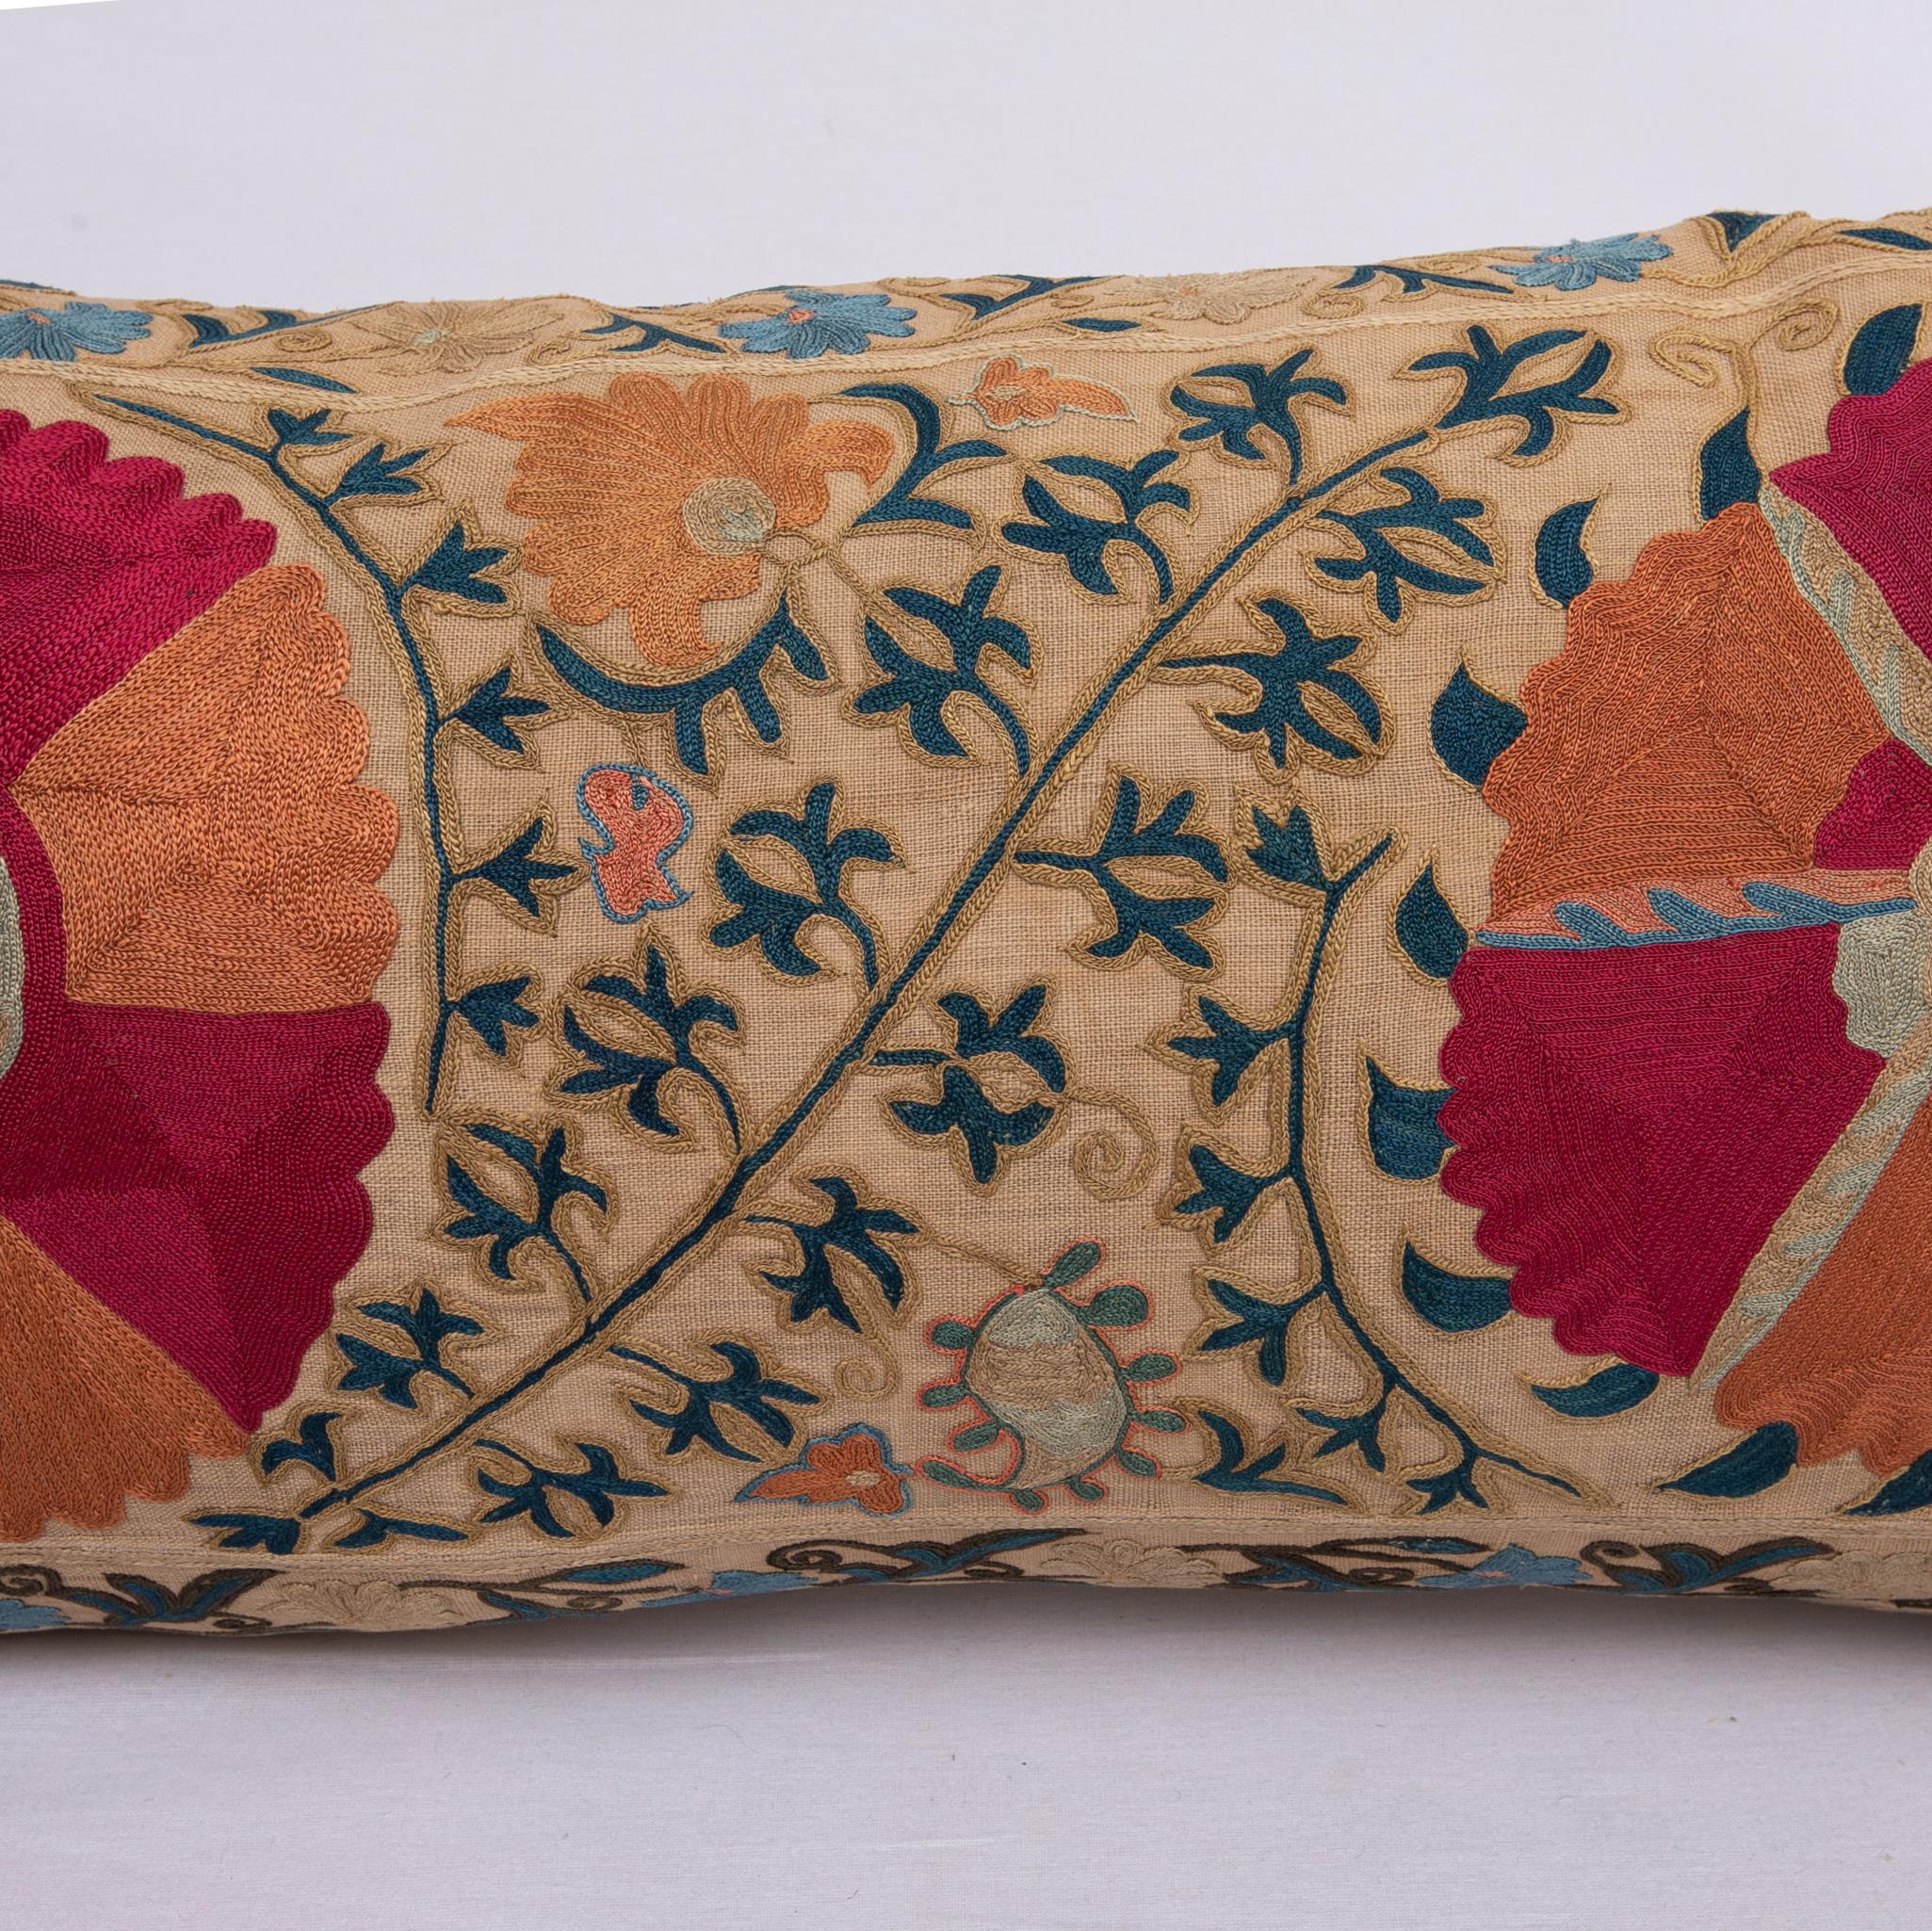 Uzbek Antique Suzani Pillowcase / Cushion Cover Made from a Mid 19th c Suzani